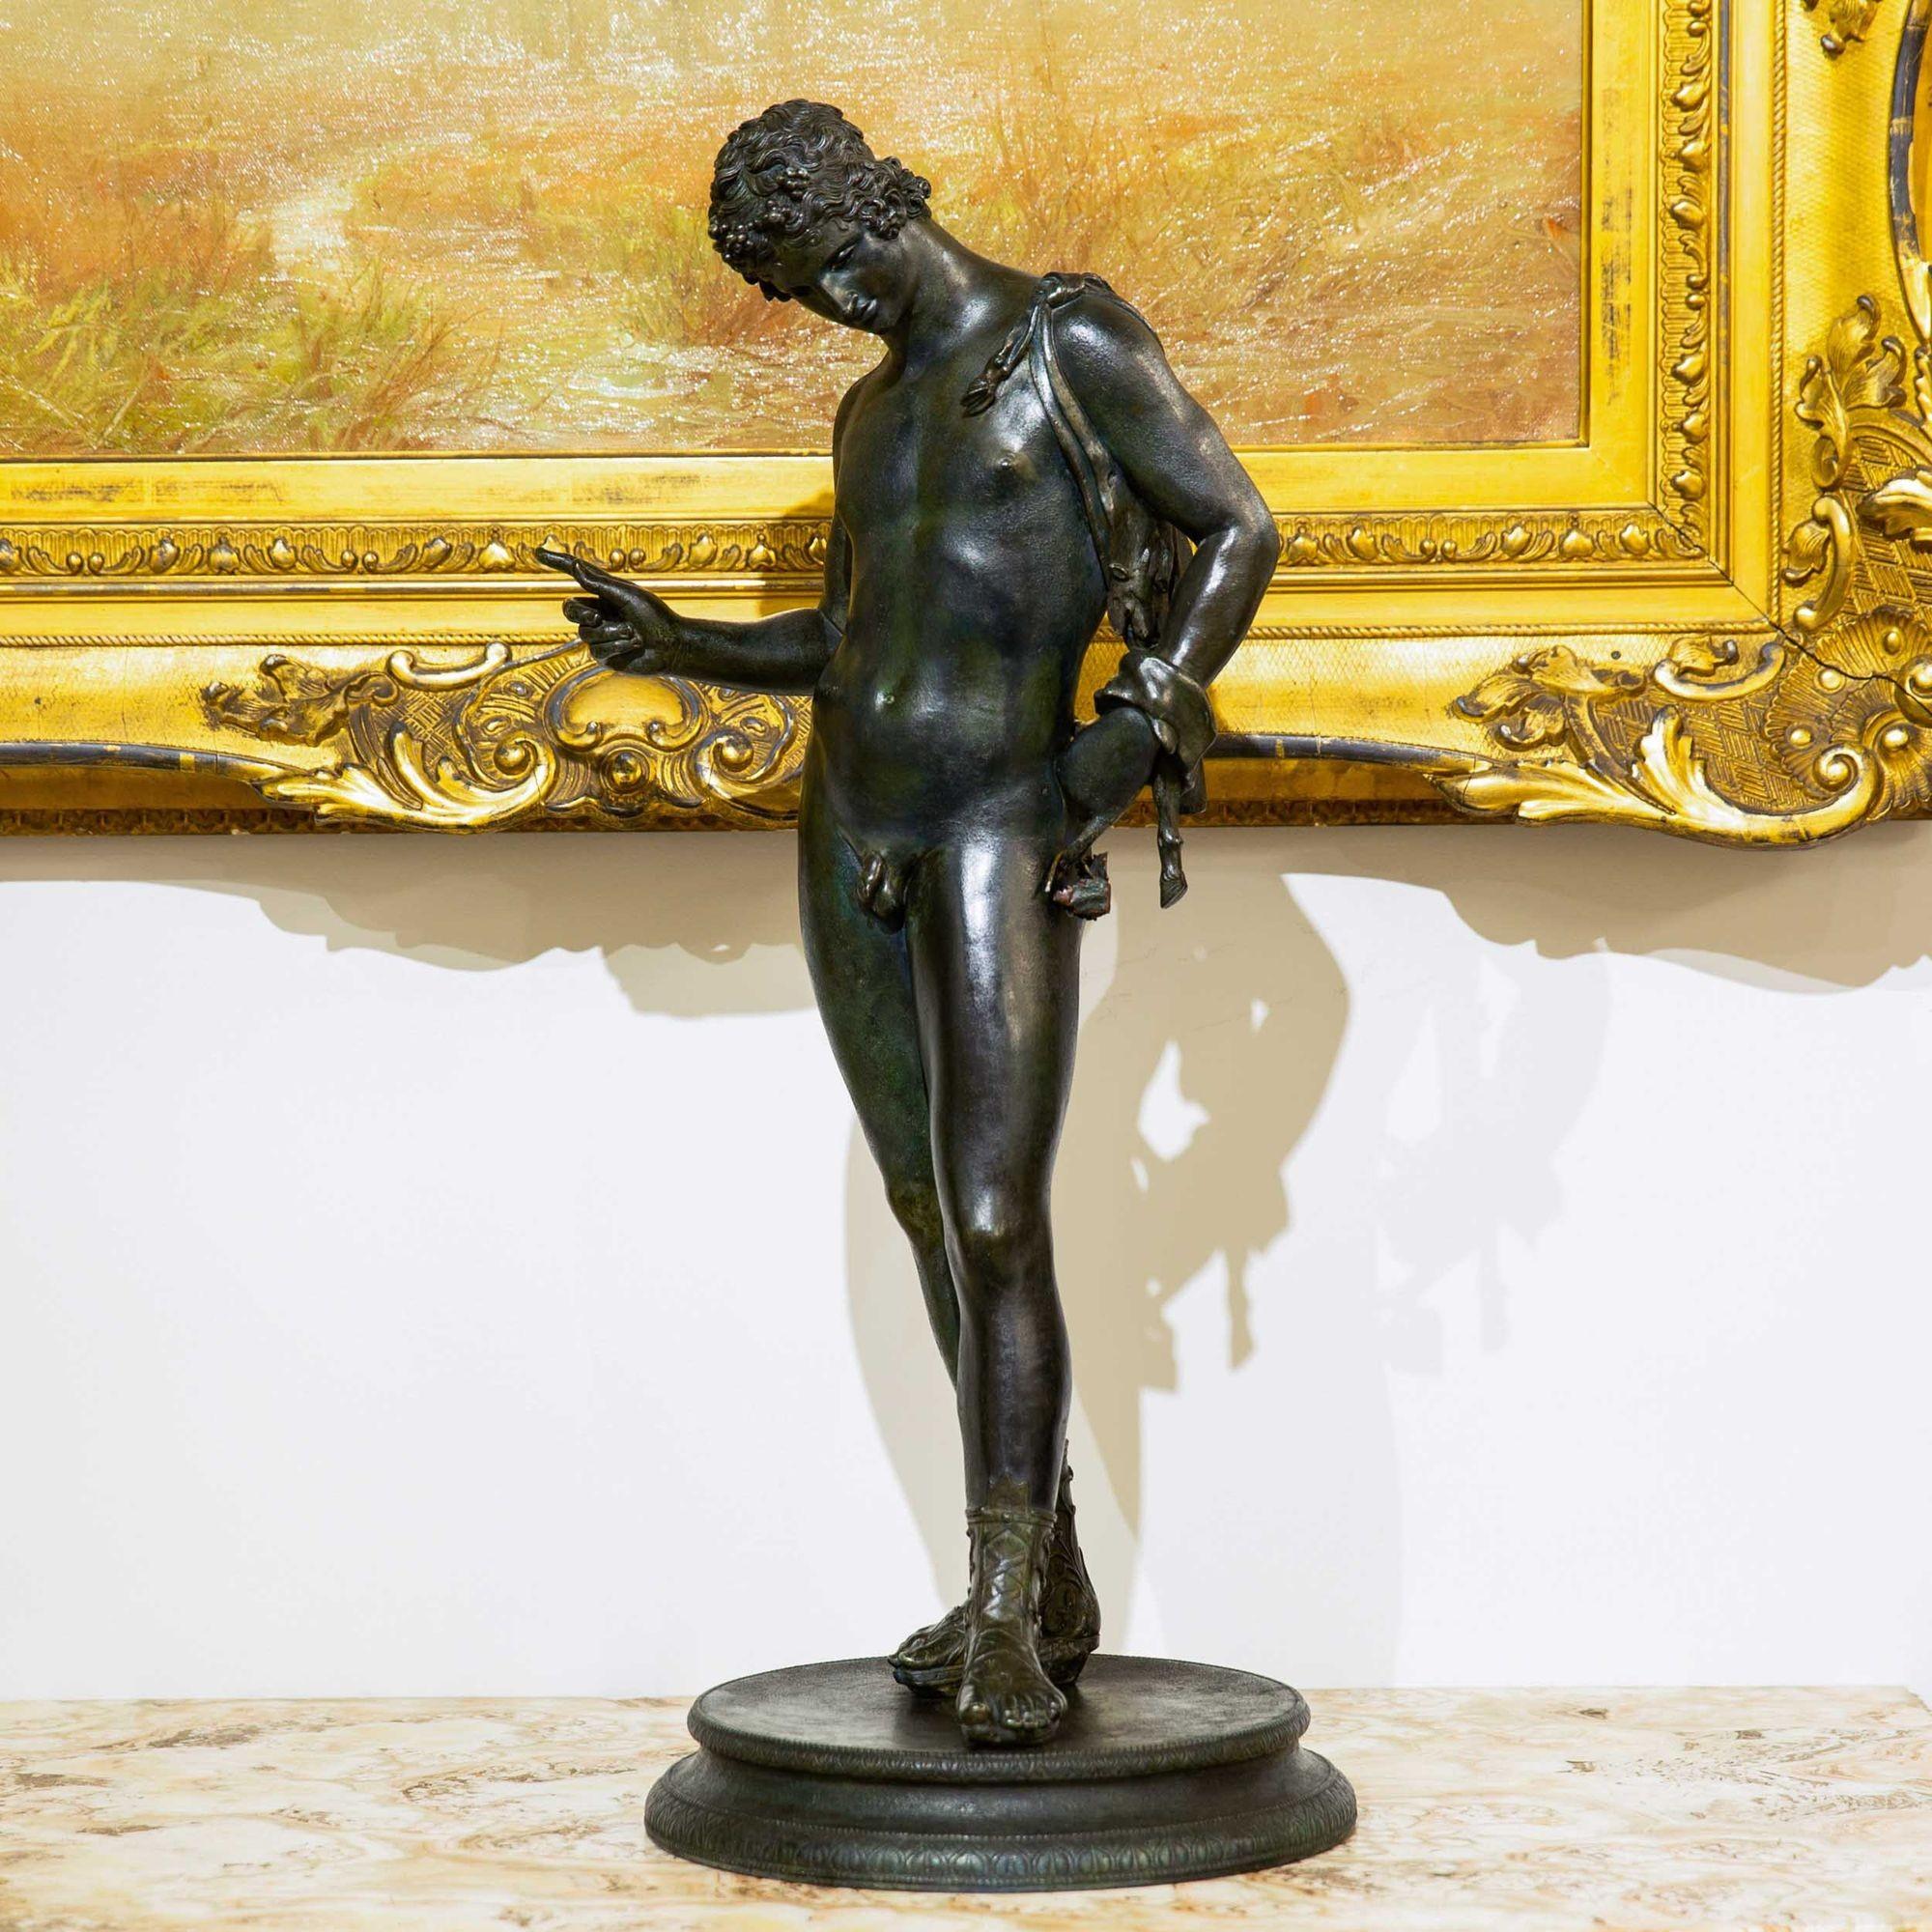 Italian Grand Tour Bronze Sculpture Statue “Narcissus” after Antiquity 2